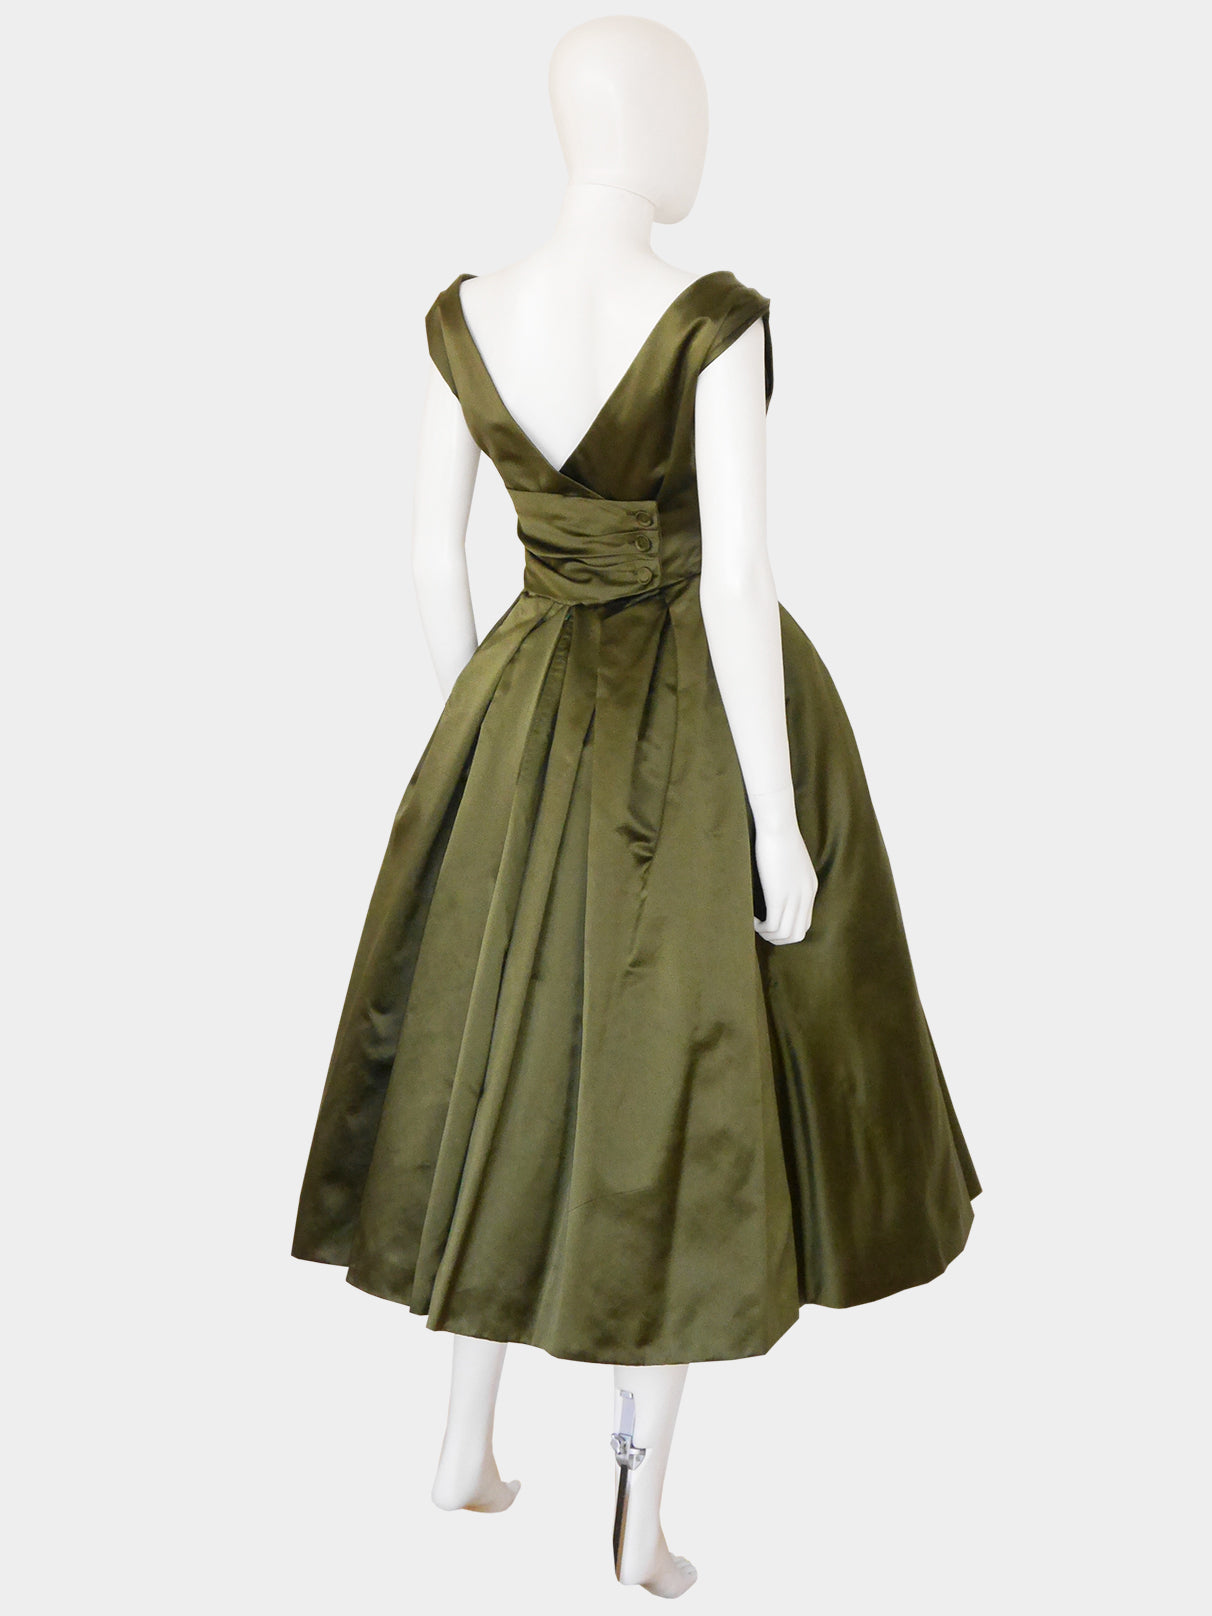 CHRISTIAN DIOR Fall 1957 Haute Couture 